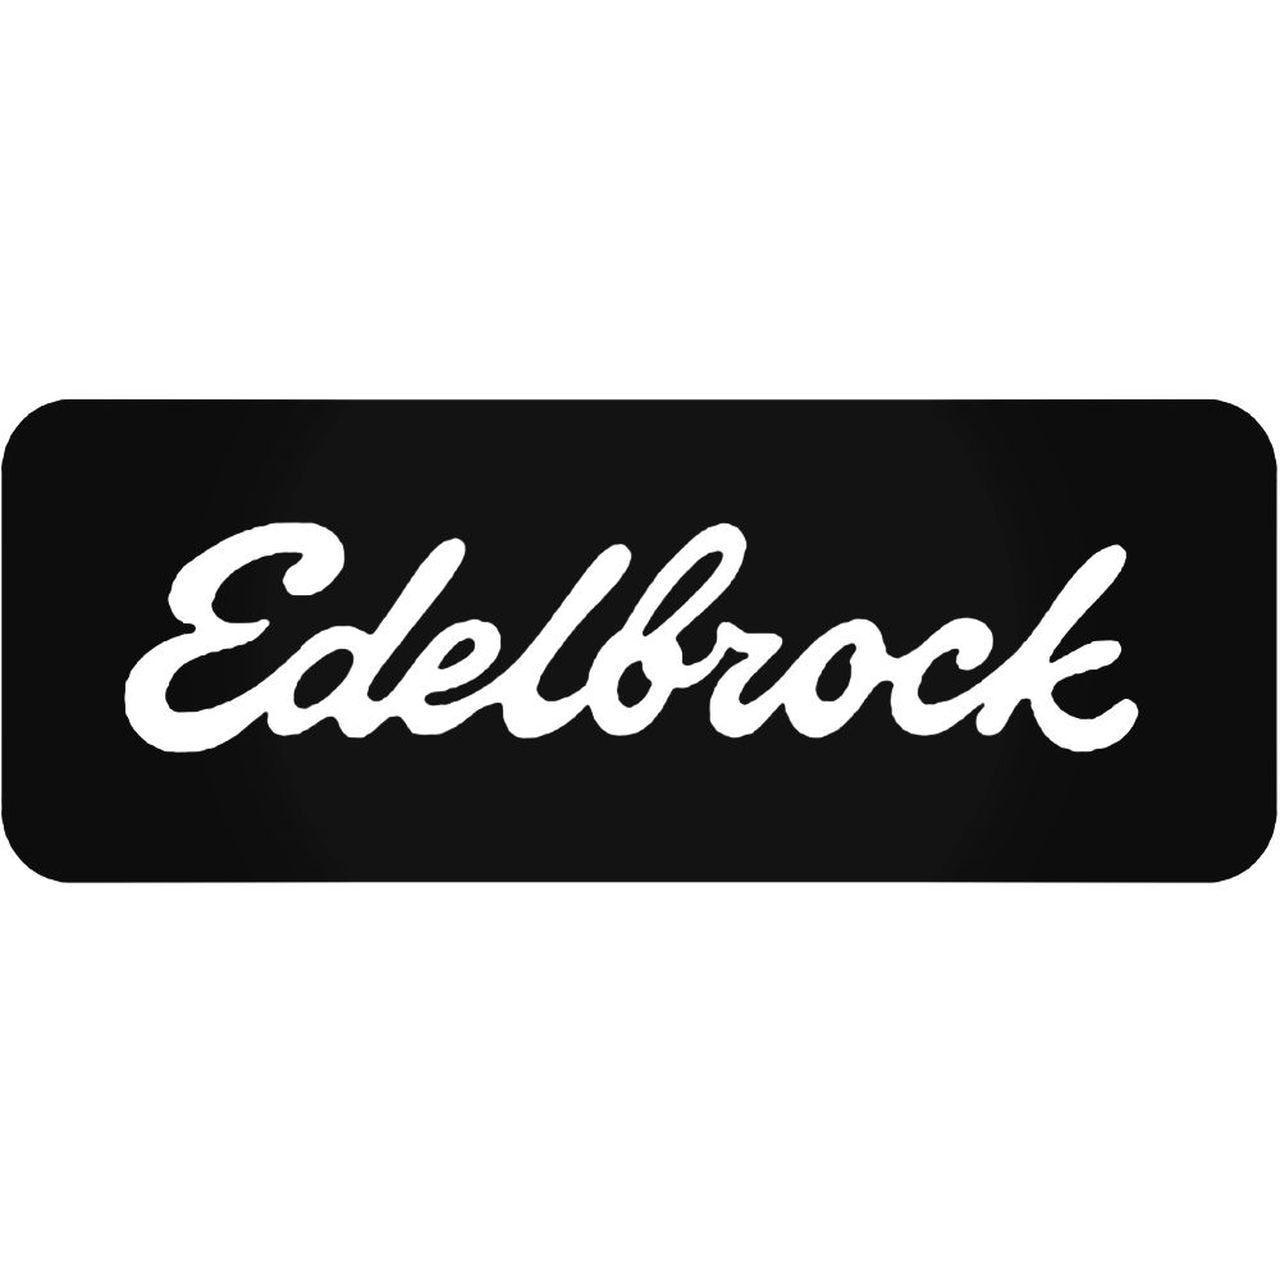 Edelbrock Logo - Edelbrock Logo Vector Aftermarket Decal Sticker